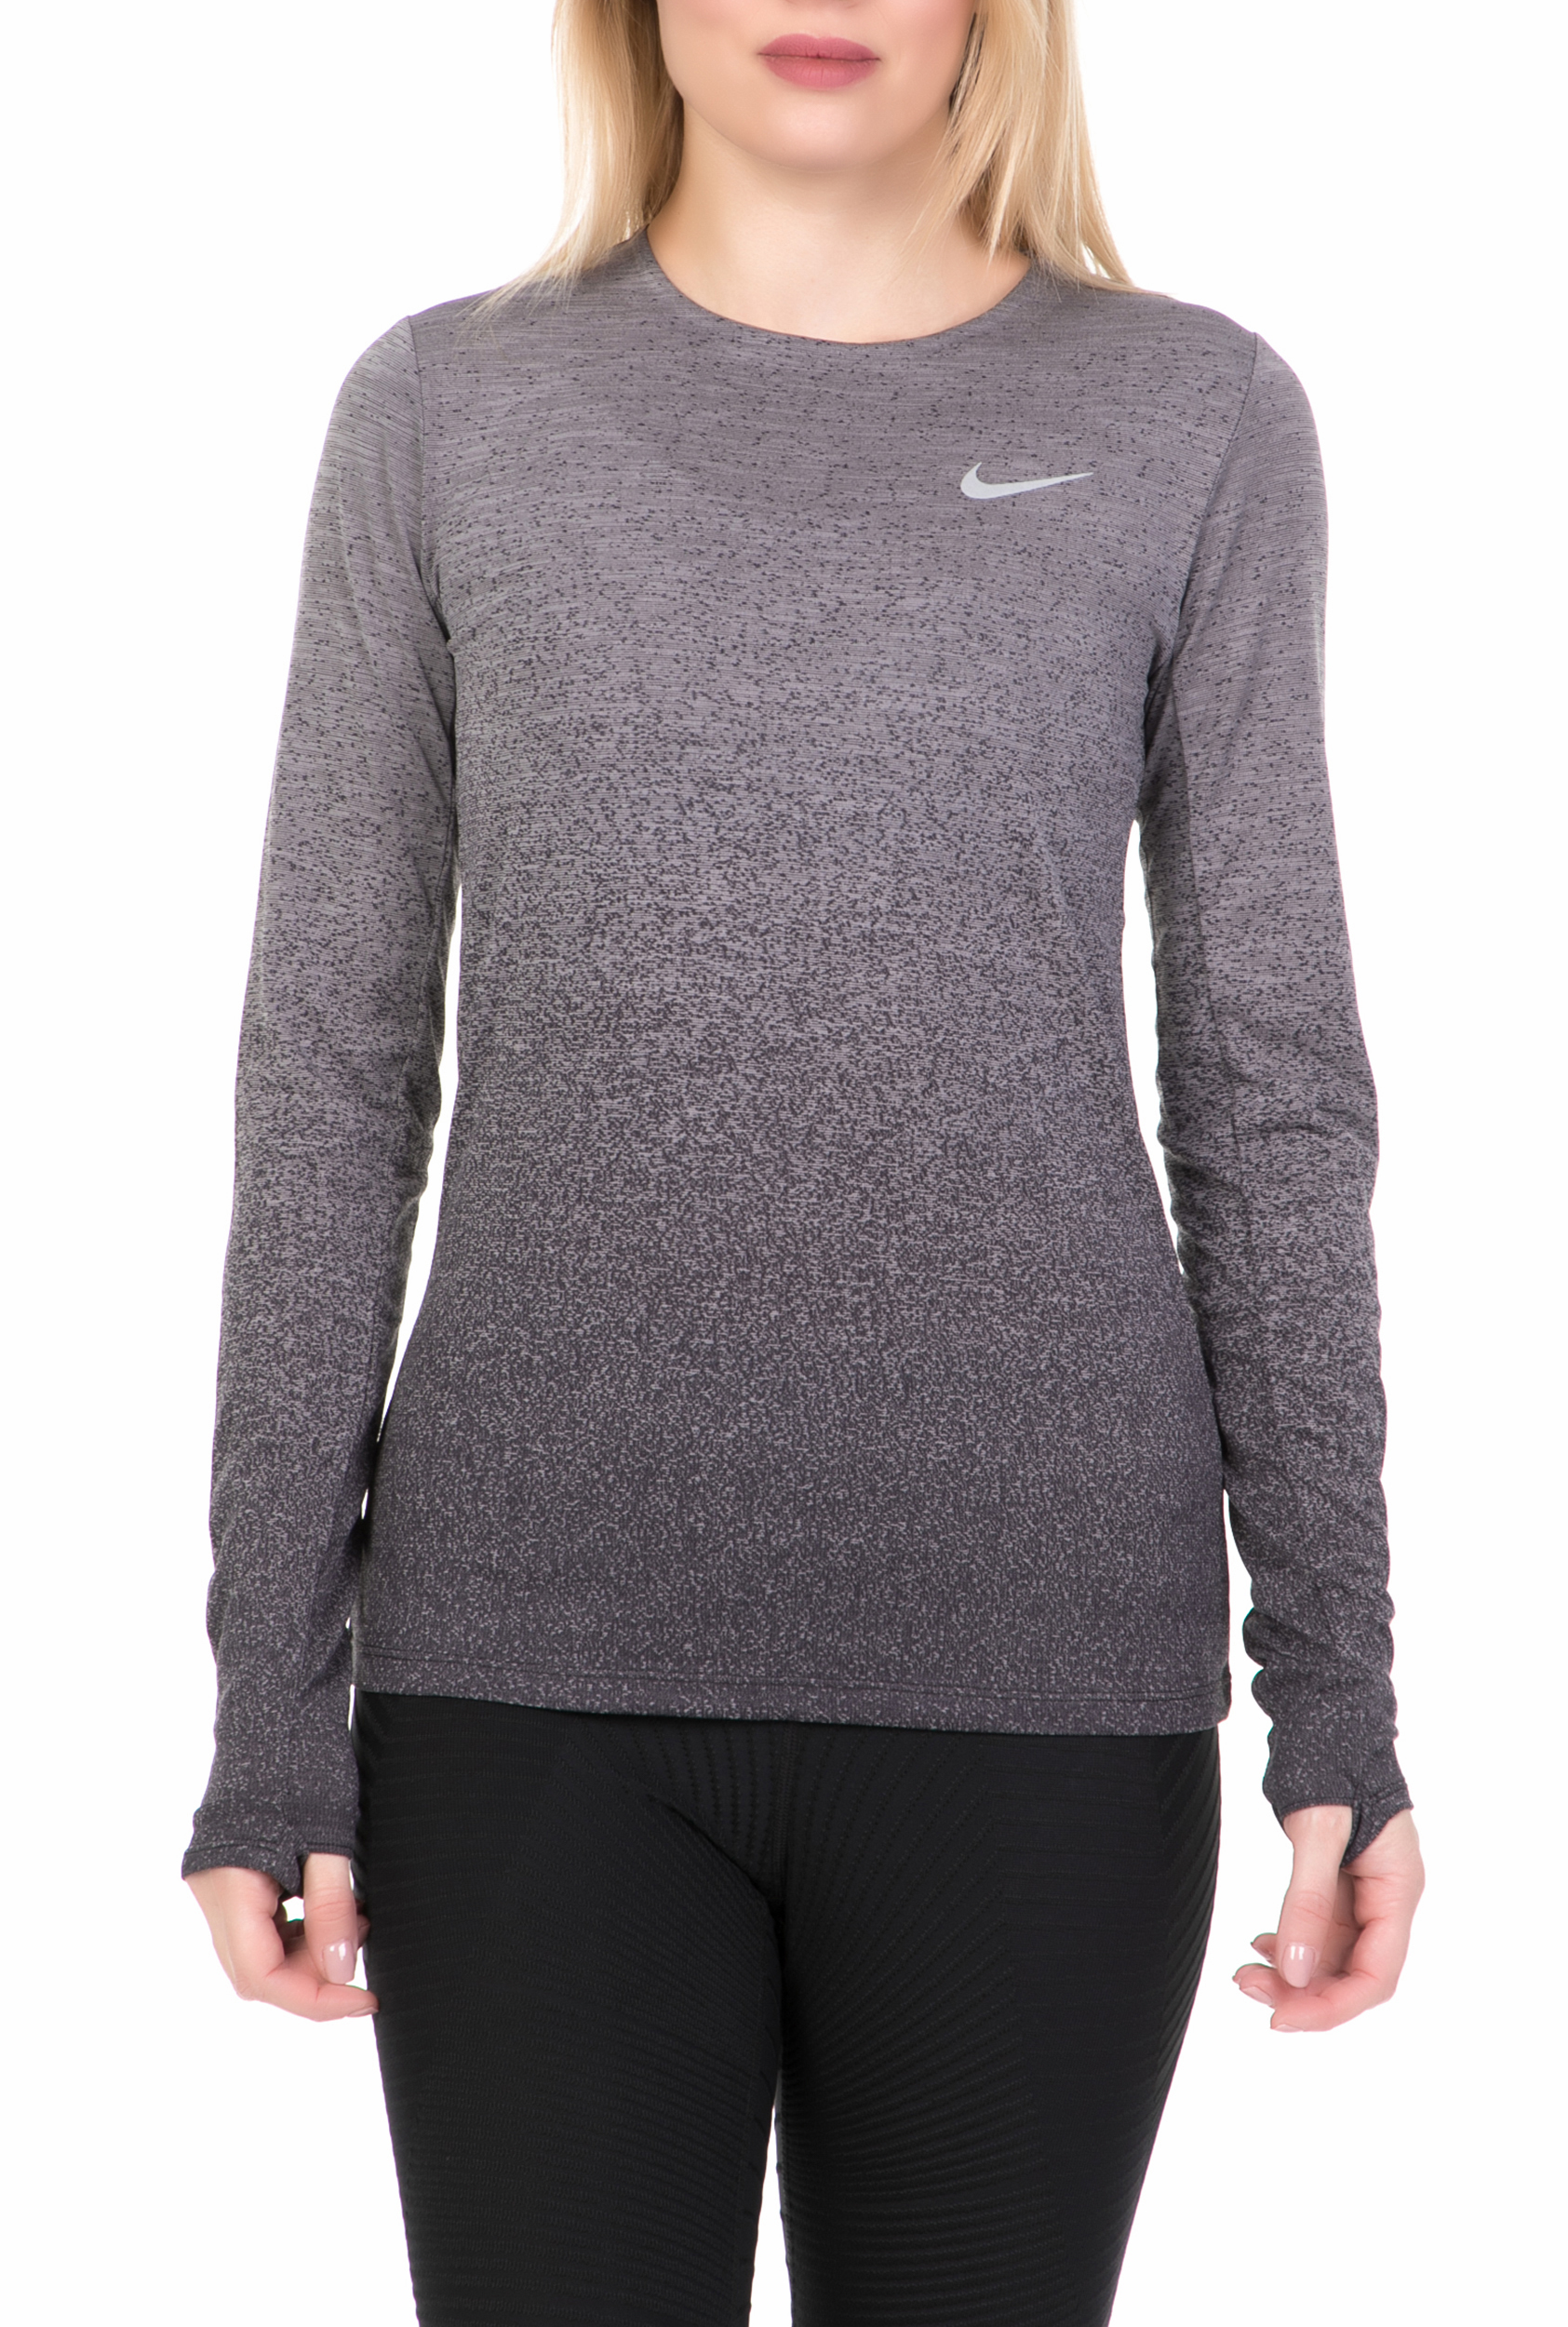 NIKE - Γυναικεία μακρυμάνικη μπλούζα για τρέξιμο Nike Medalist γκρι Γυναικεία/Ρούχα/Αθλητικά/Φούτερ-Μακρυμάνικα